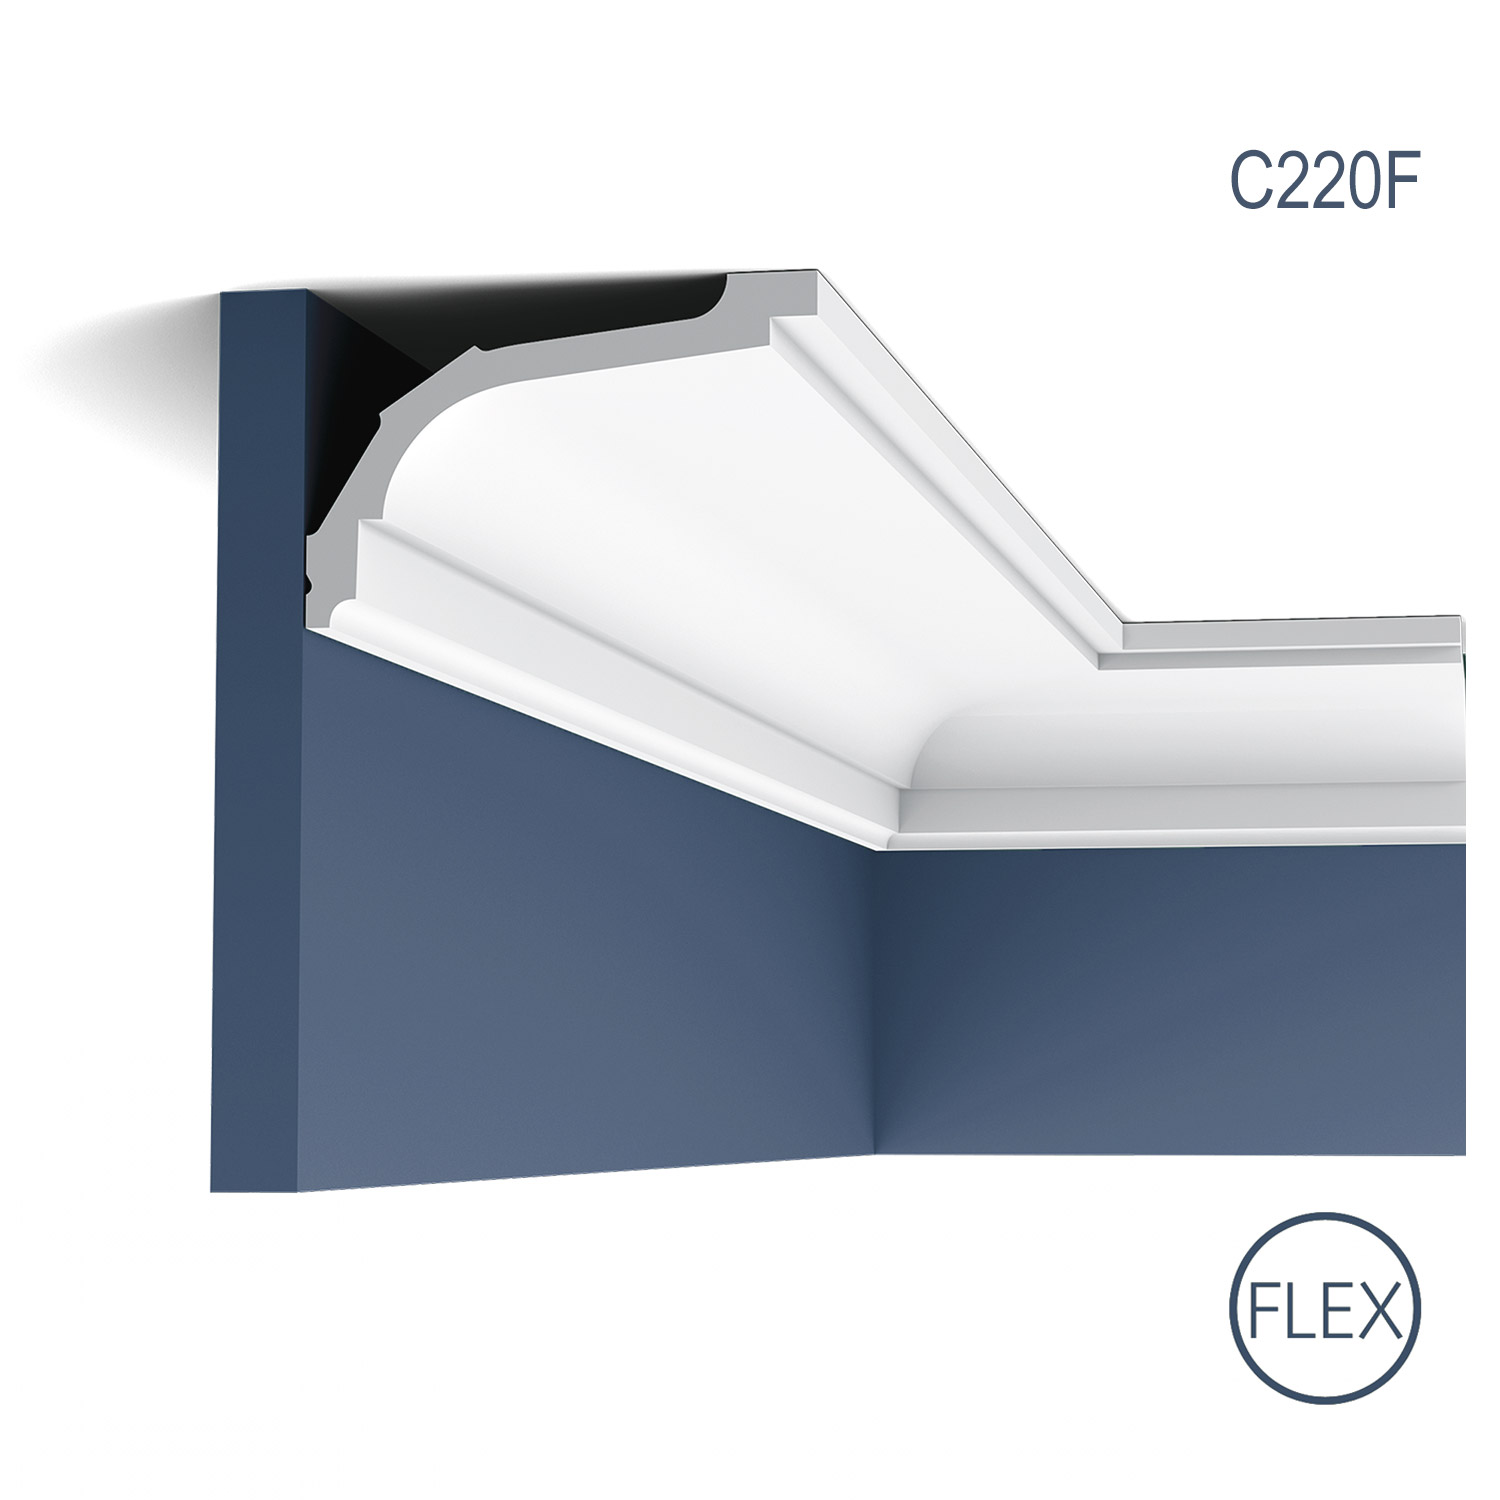 Cornisa Flex Luxxus C220F, Dimensiuni: 200 X 7.6 X 11.6 cm, Orac Decor